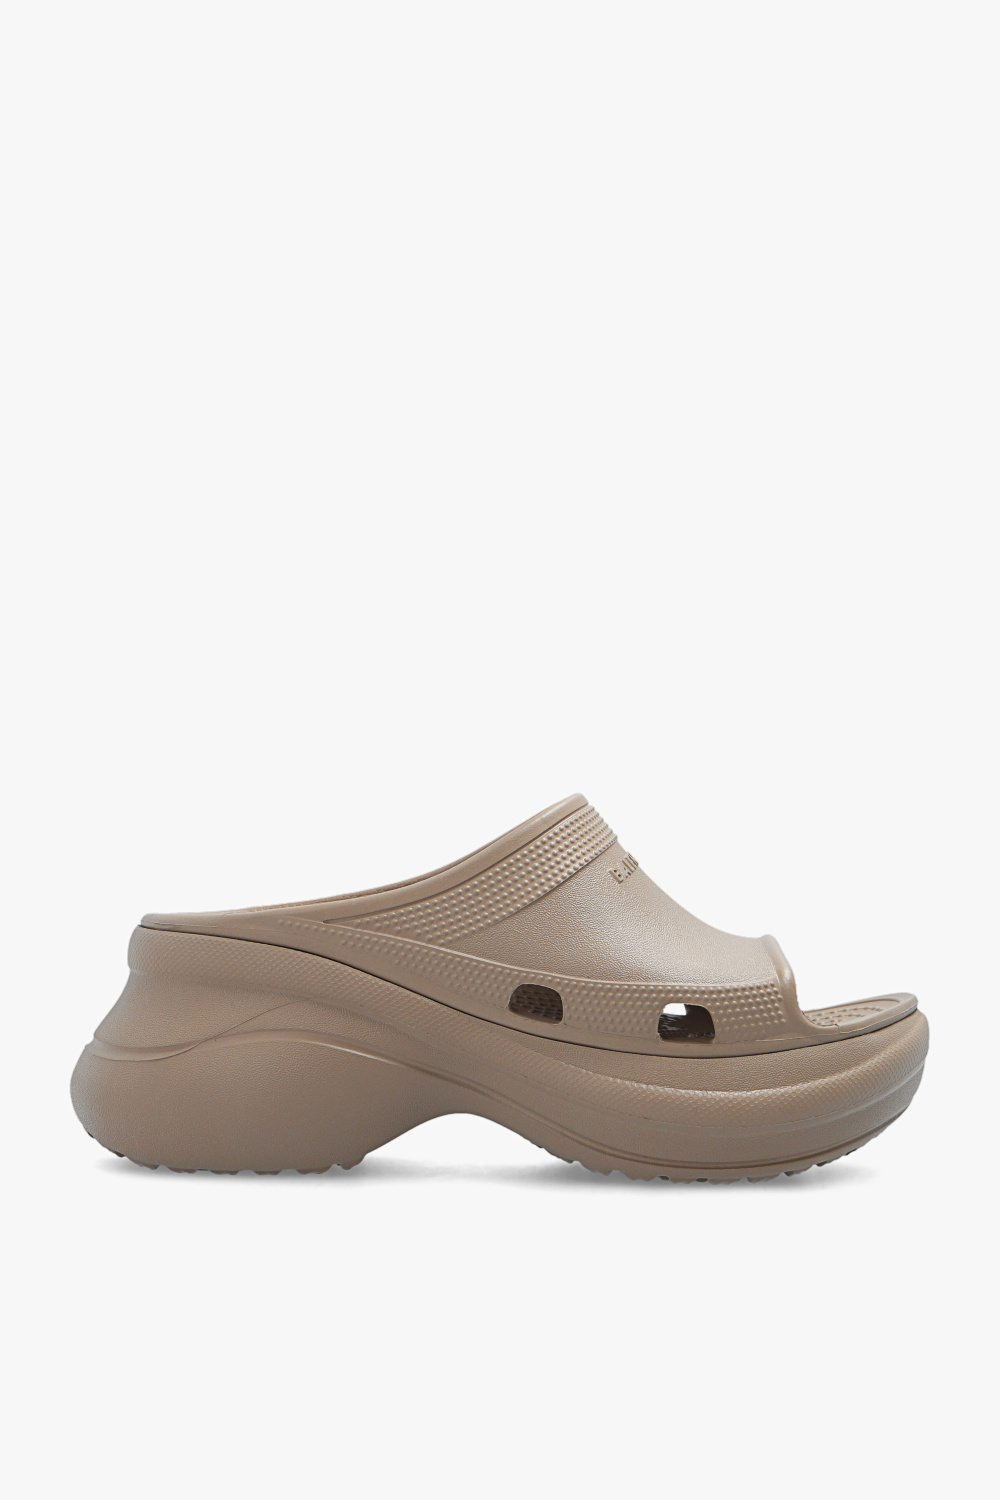 Gucci rubber slide sandals mules crocs with 5cm heels, Women's